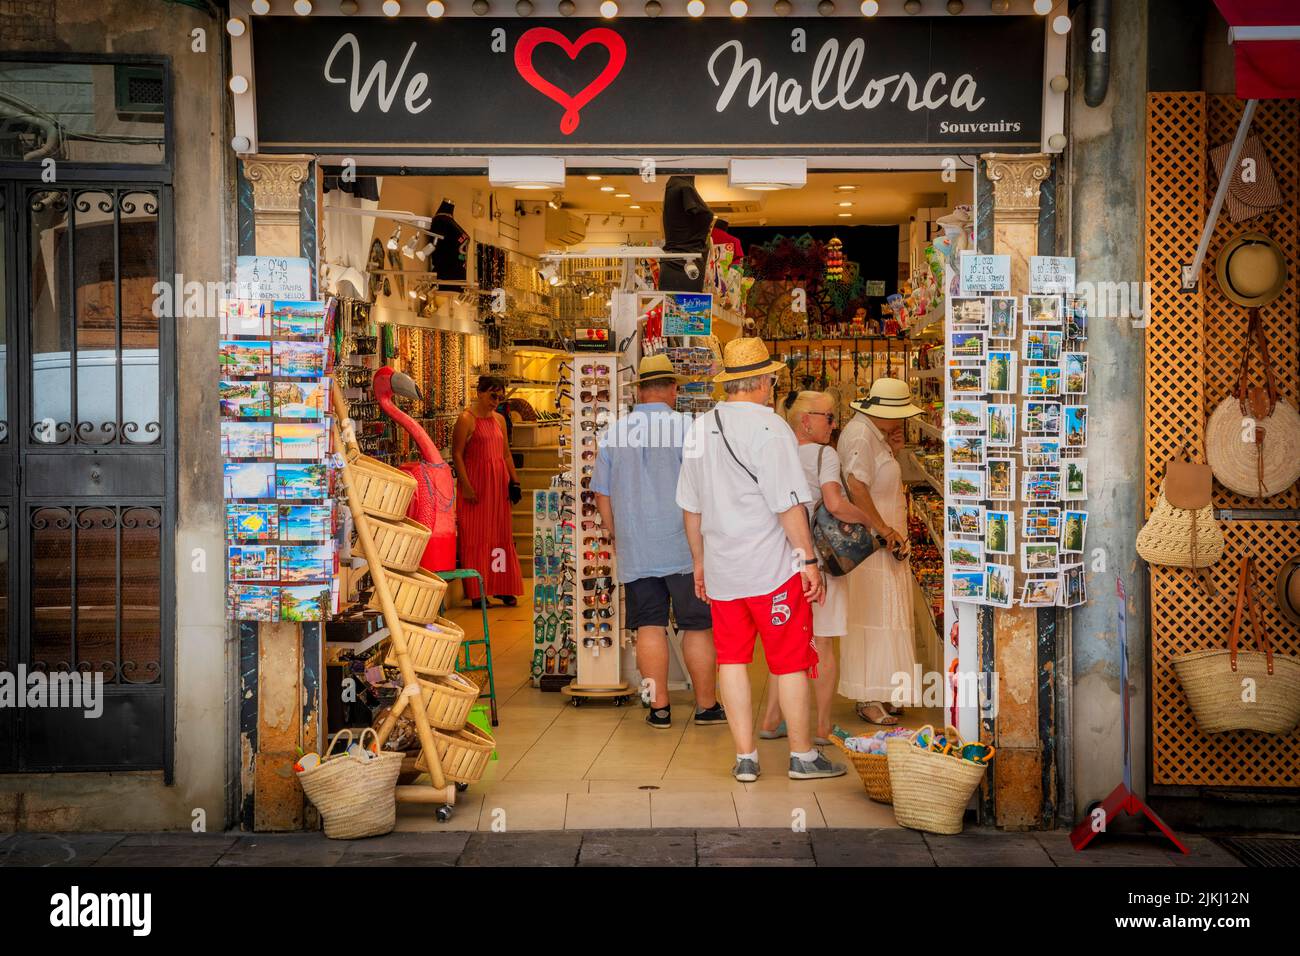 Spain, Balearic islands, Mallorca, Palma. A souvenir shop WE LOVE MALLORCA in Palma de Mallorca with people looking the items Stock Photo